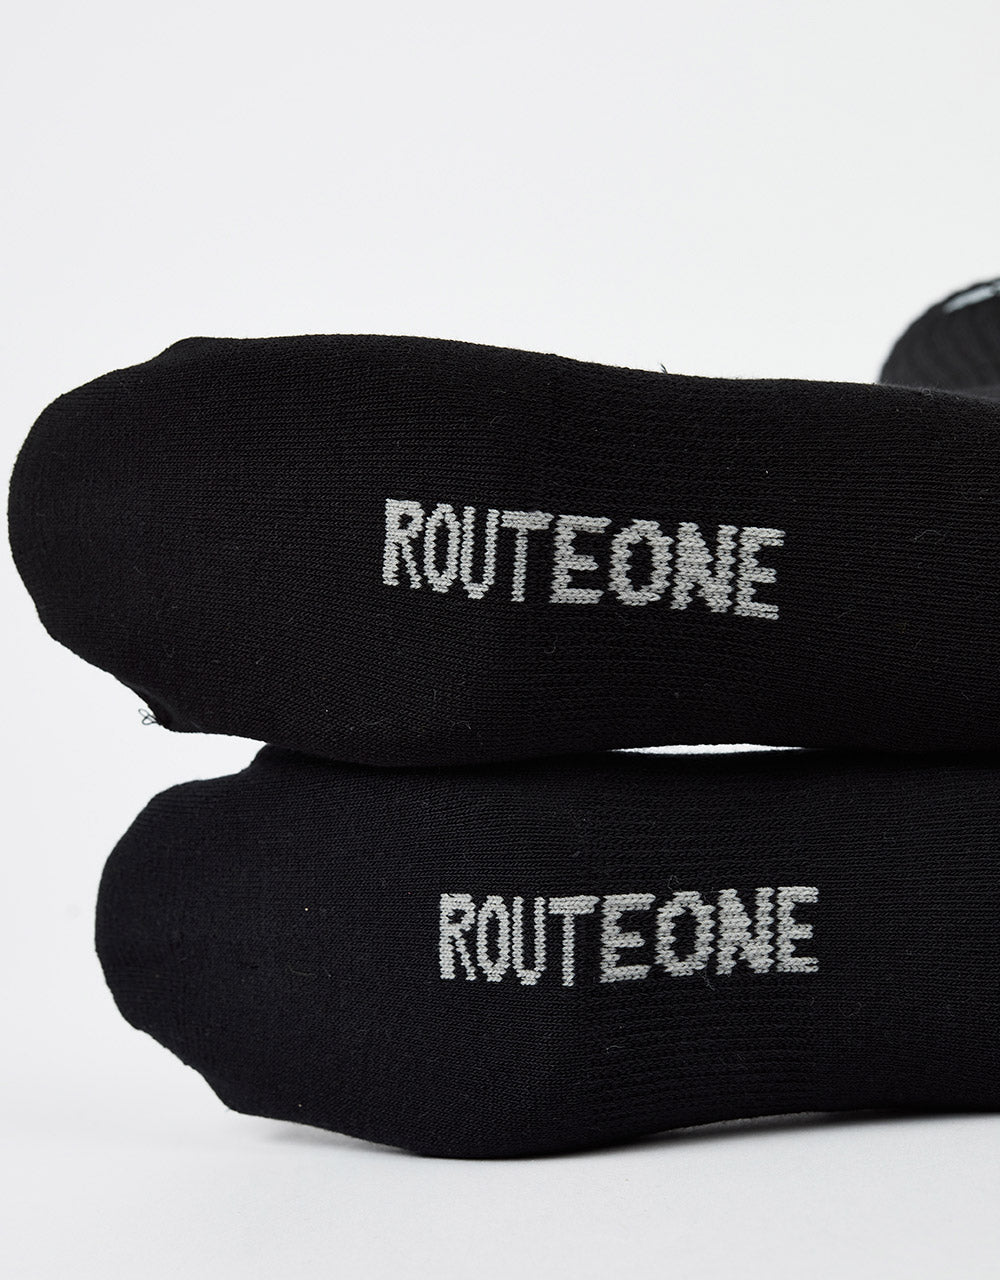 Route One Curb Socks - Black